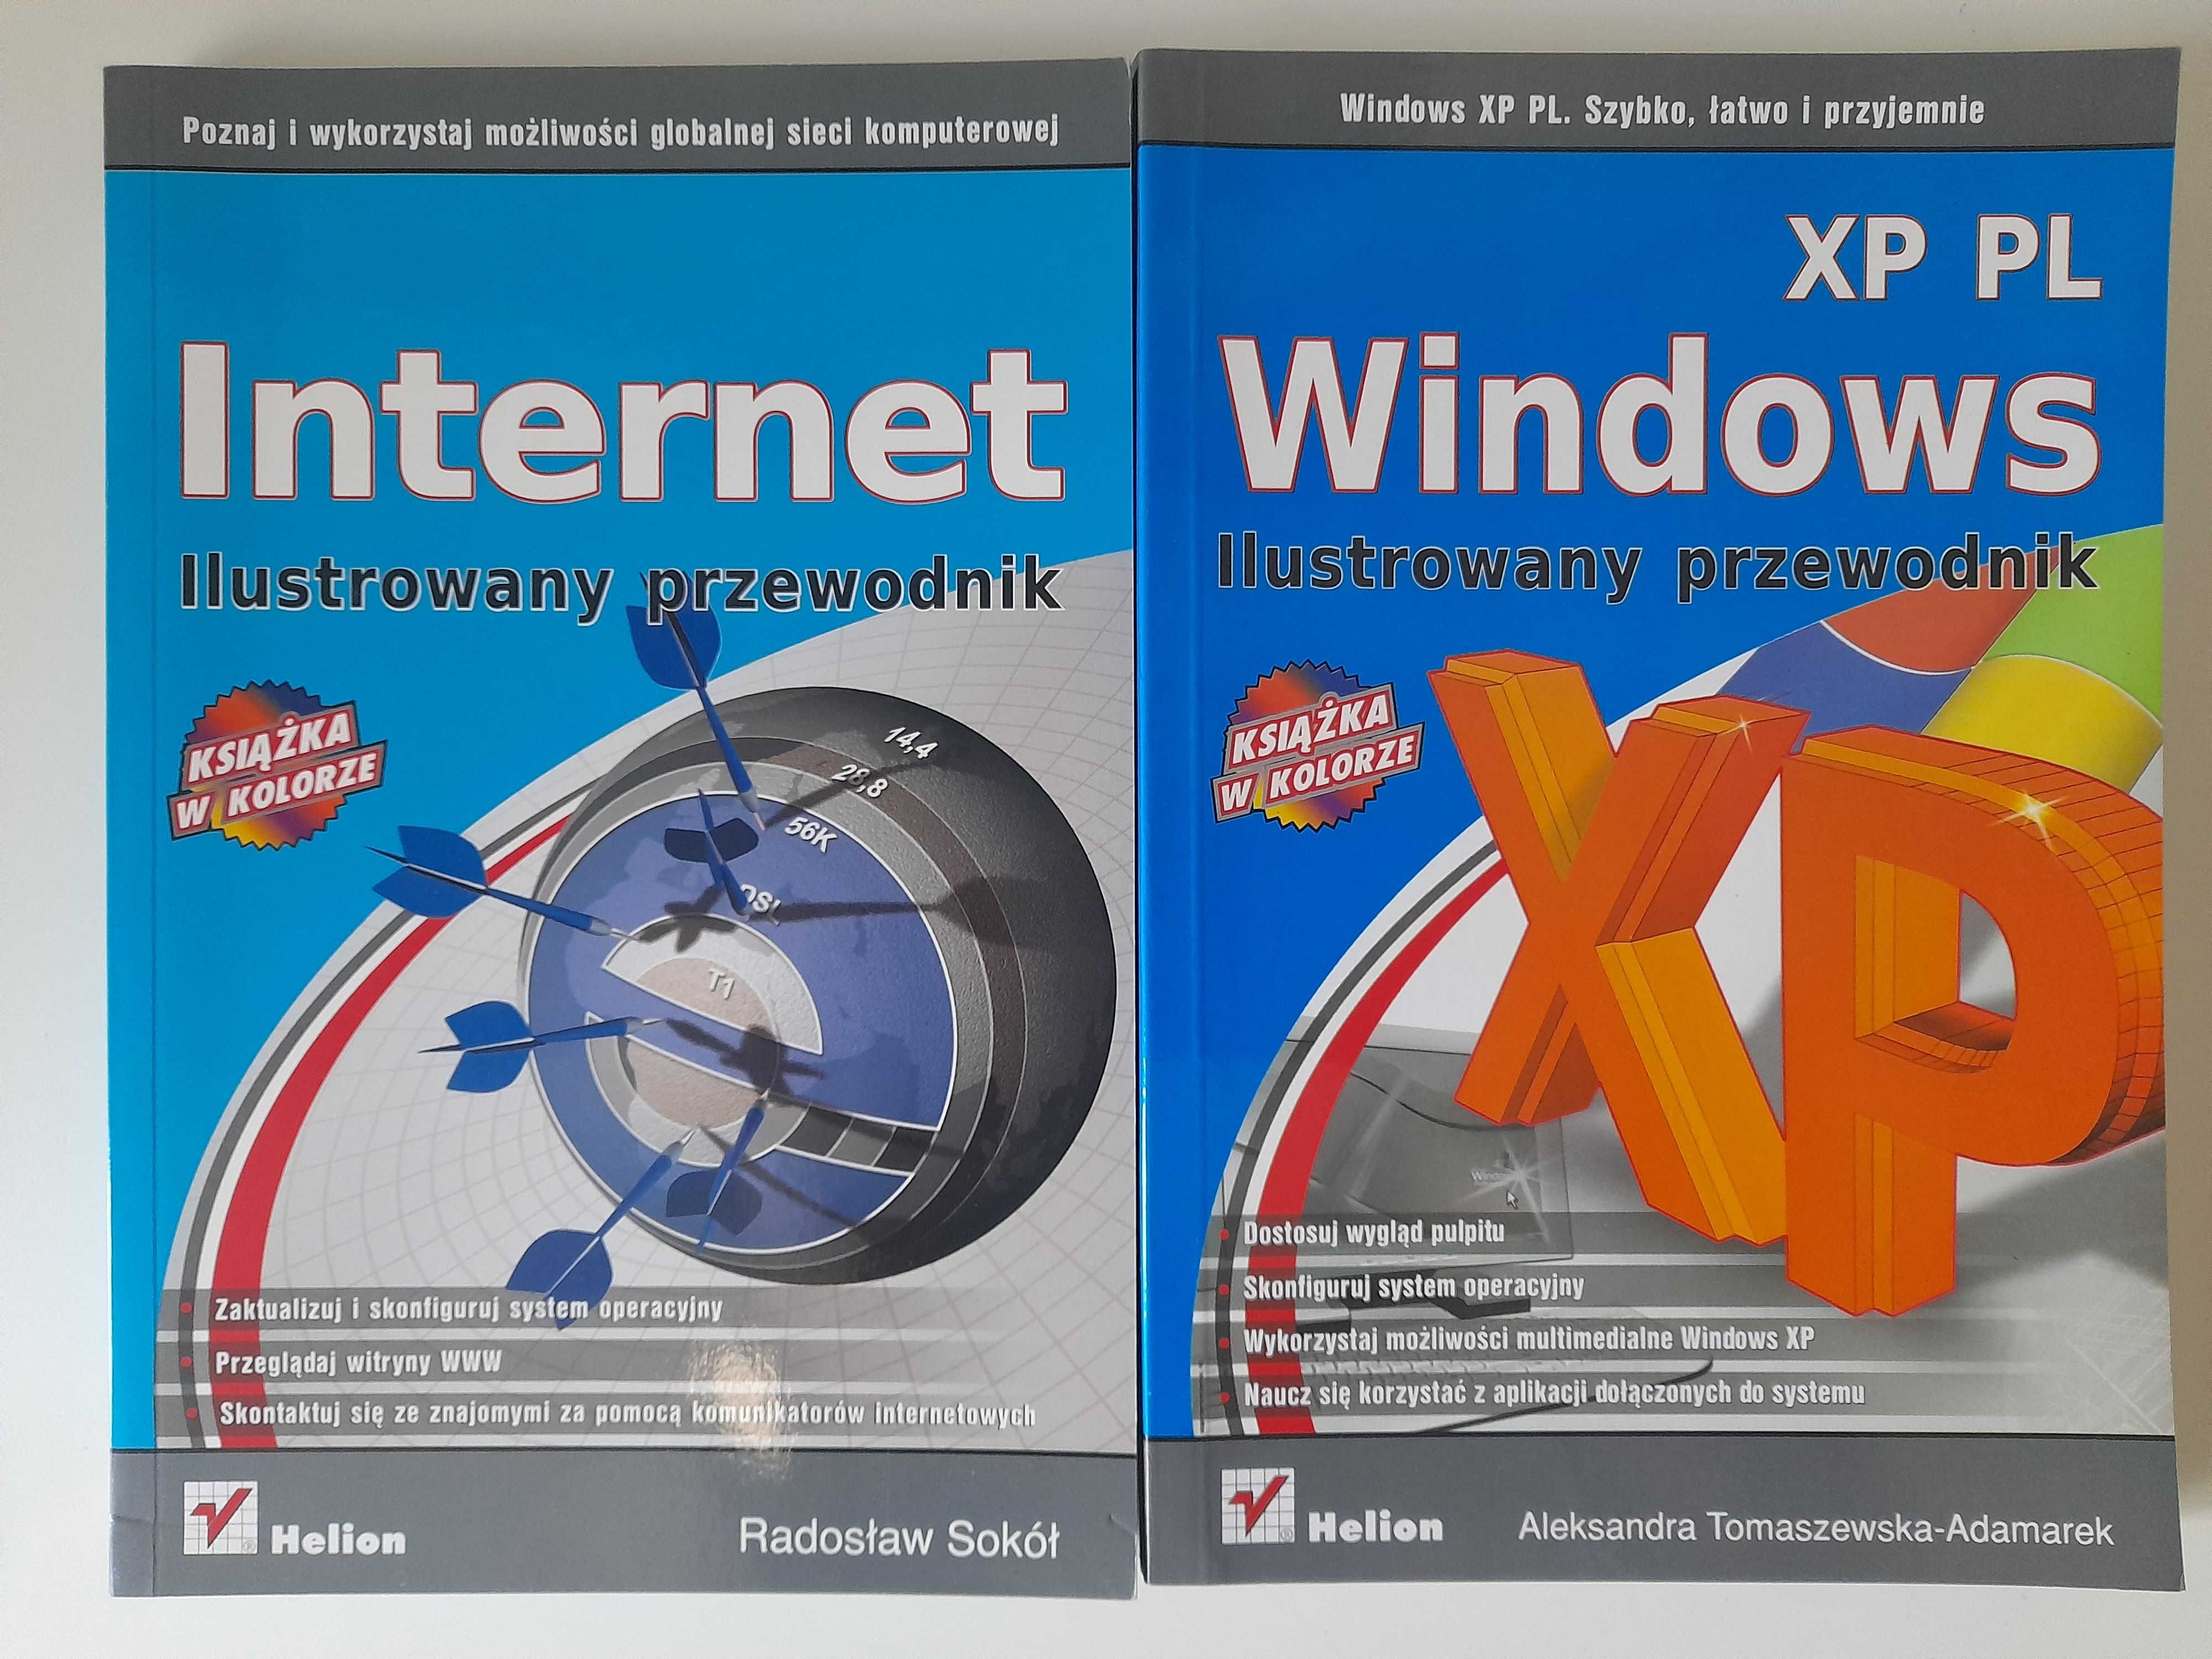 Internet, Windows XP PL - ilustrowane przewodniki + gratis